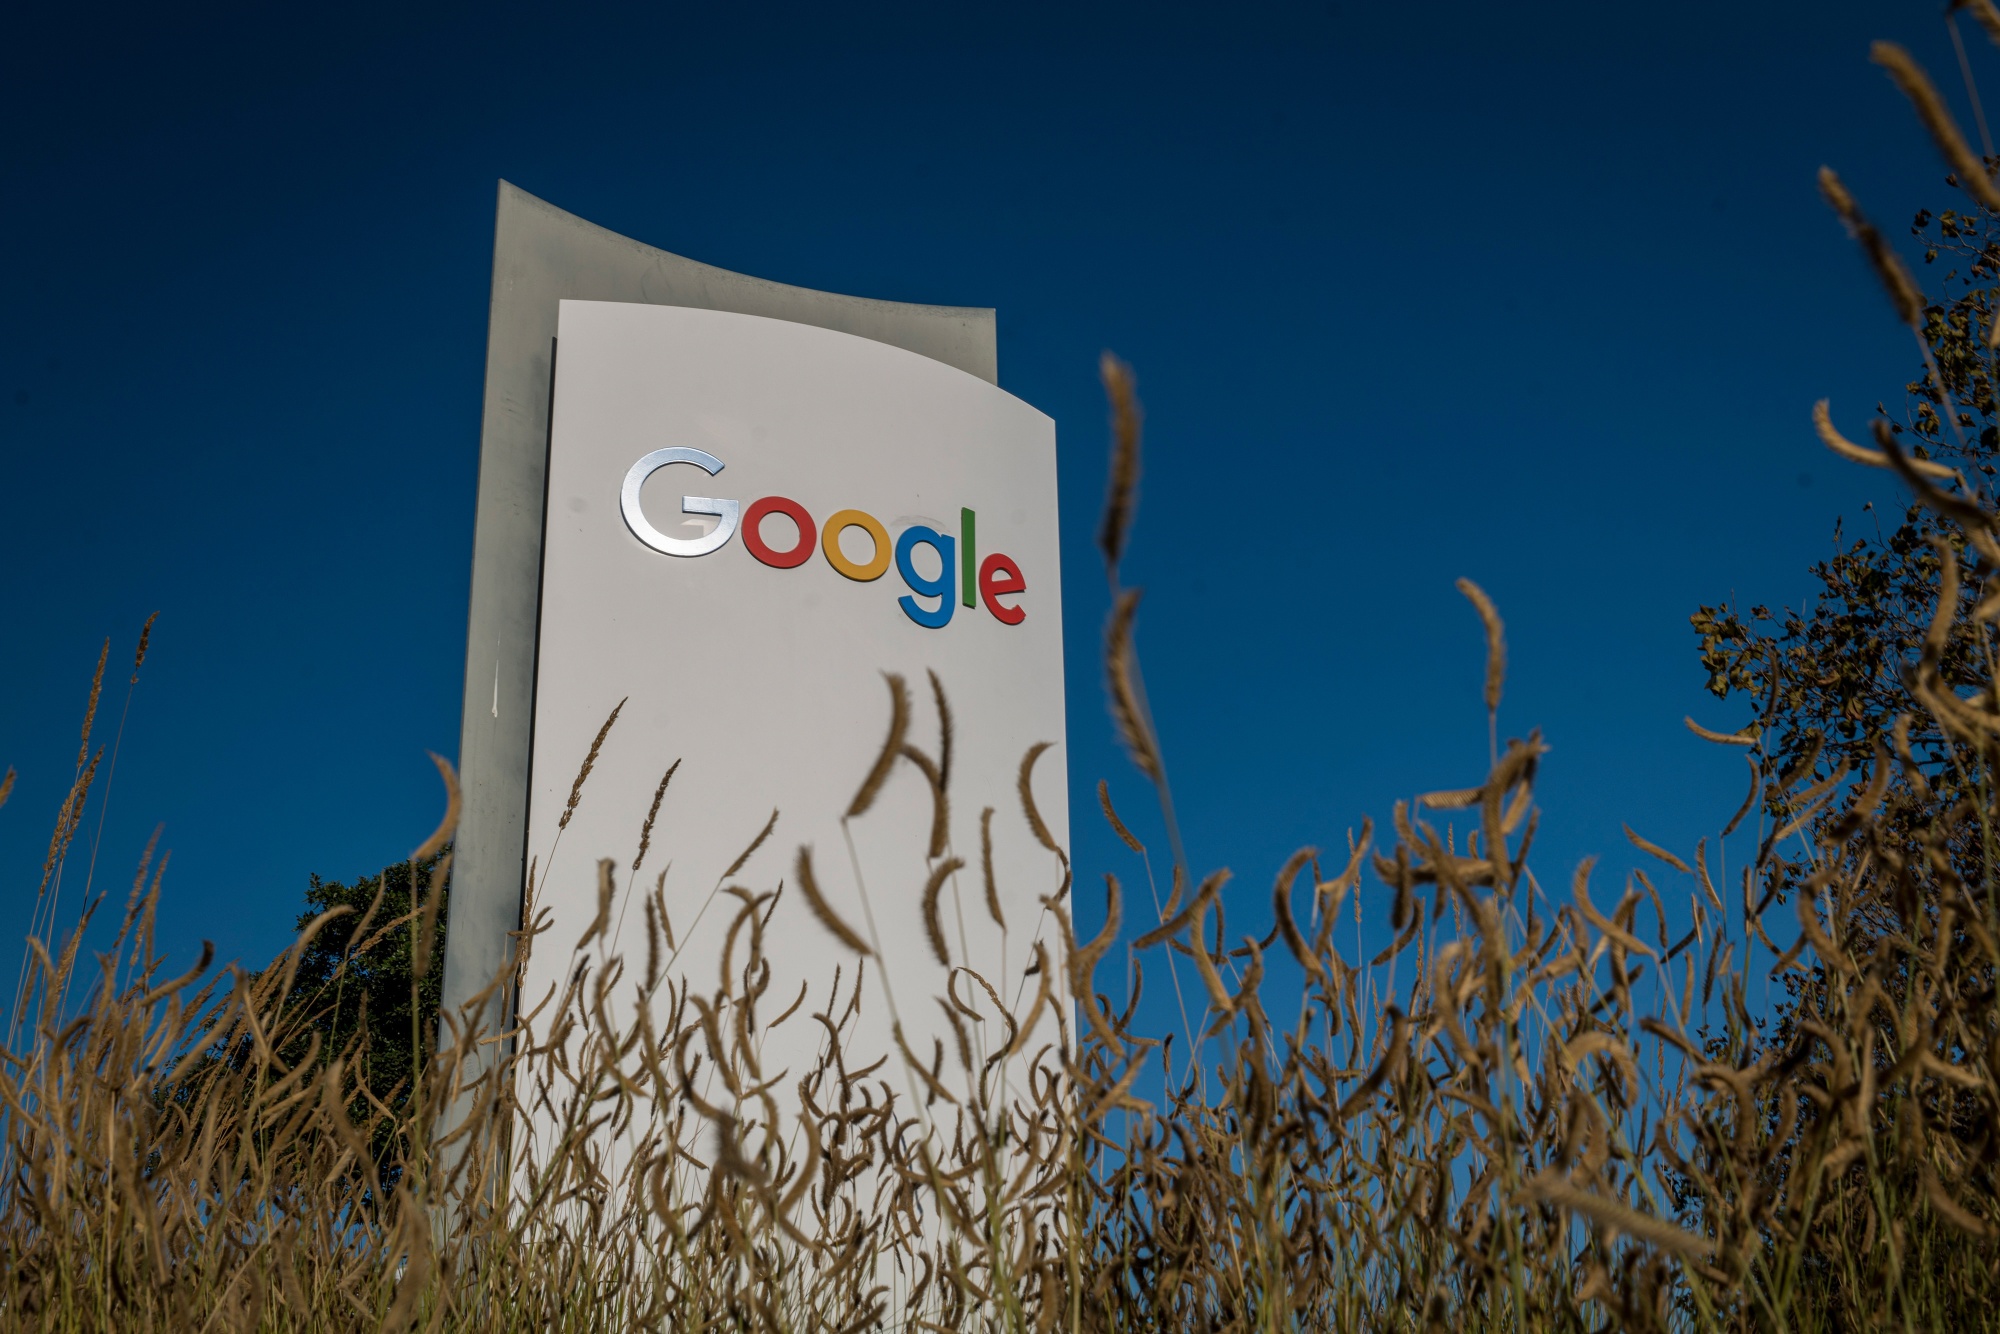 Google campus in Mountain View, California.